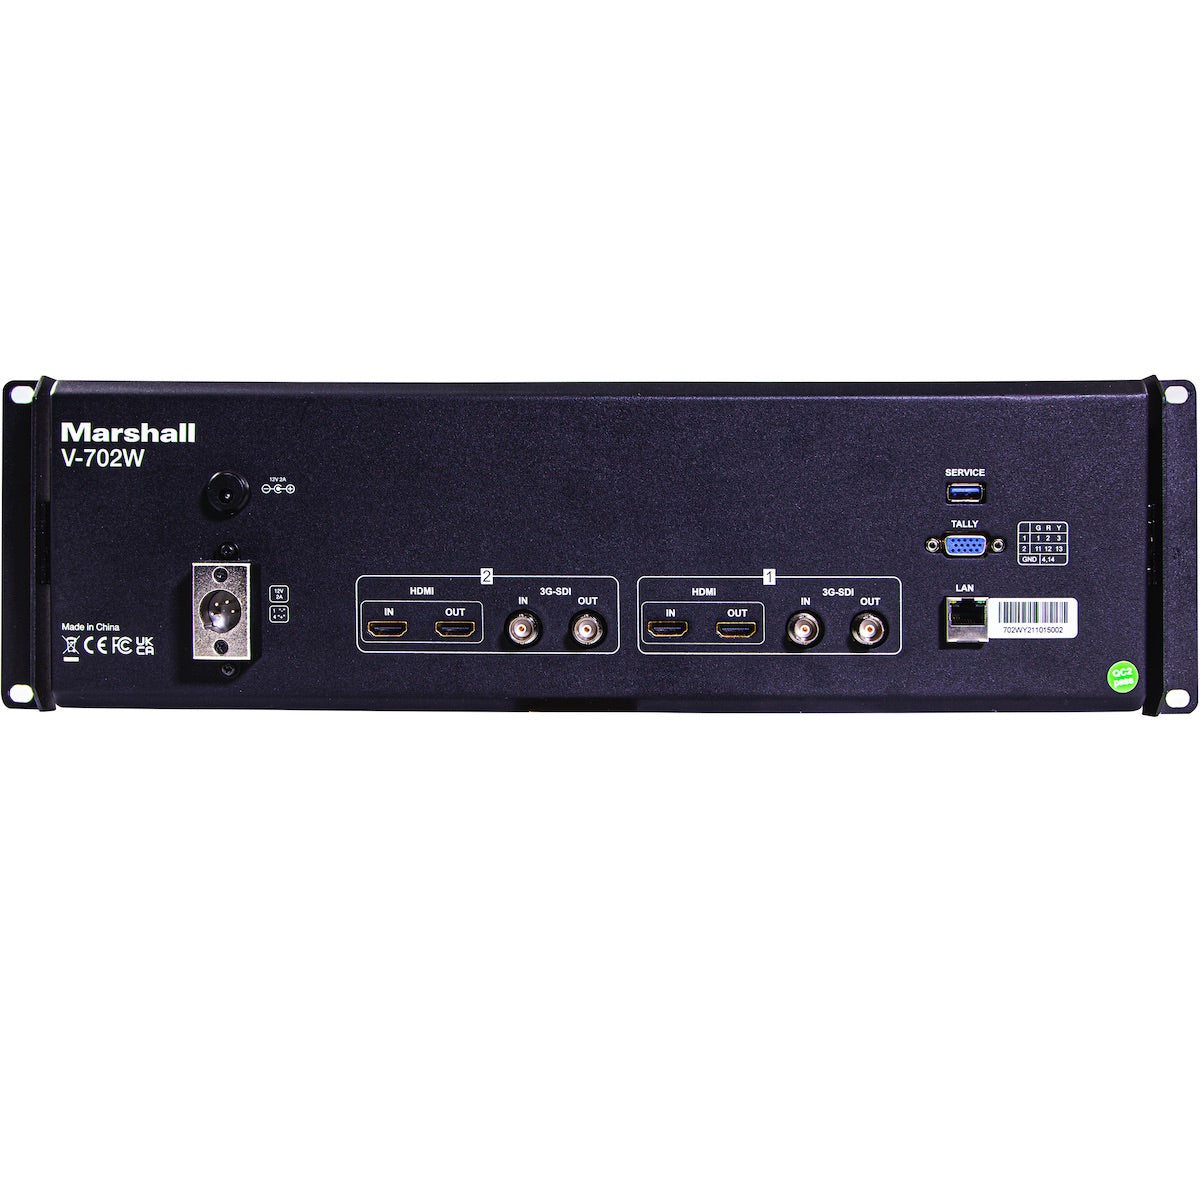 Marshall V-702W - Dual 7" HD Rack Monitor with 3G-SDI & HDMI Inputs, rear